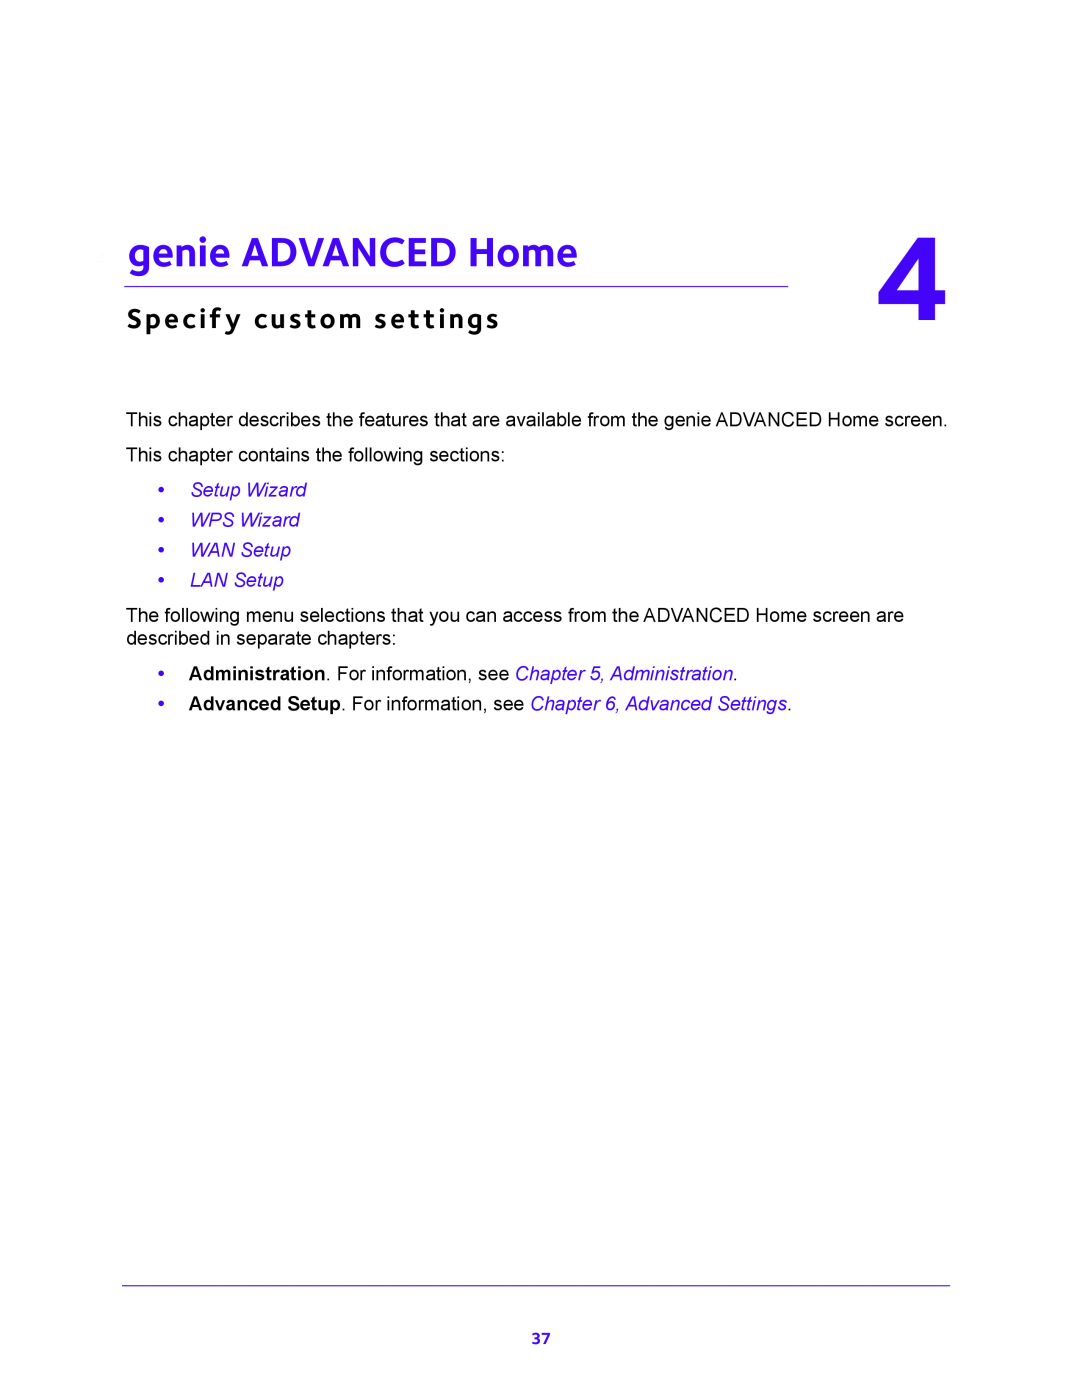 NETGEAR JNR1010V2 user manual genie ADVANCED Home, Specify custom settings, Setup Wizard WPS Wizard WAN Setup LAN Setup 